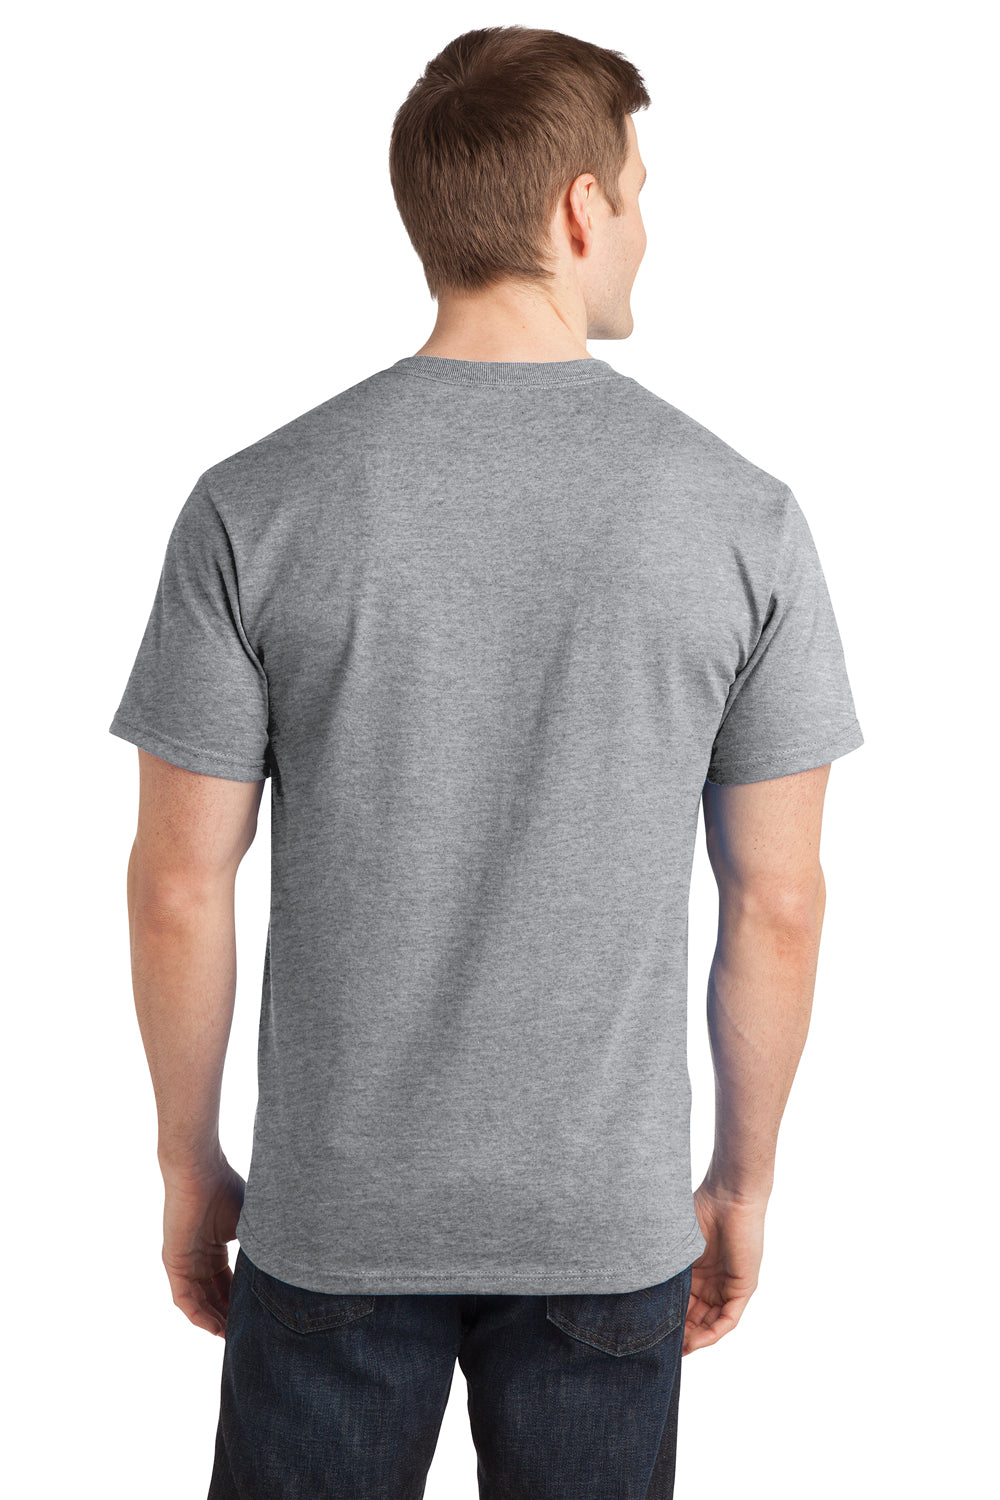 Port & Company PC150 Mens Short Sleeve Crewneck T-Shirt Heather Grey Back